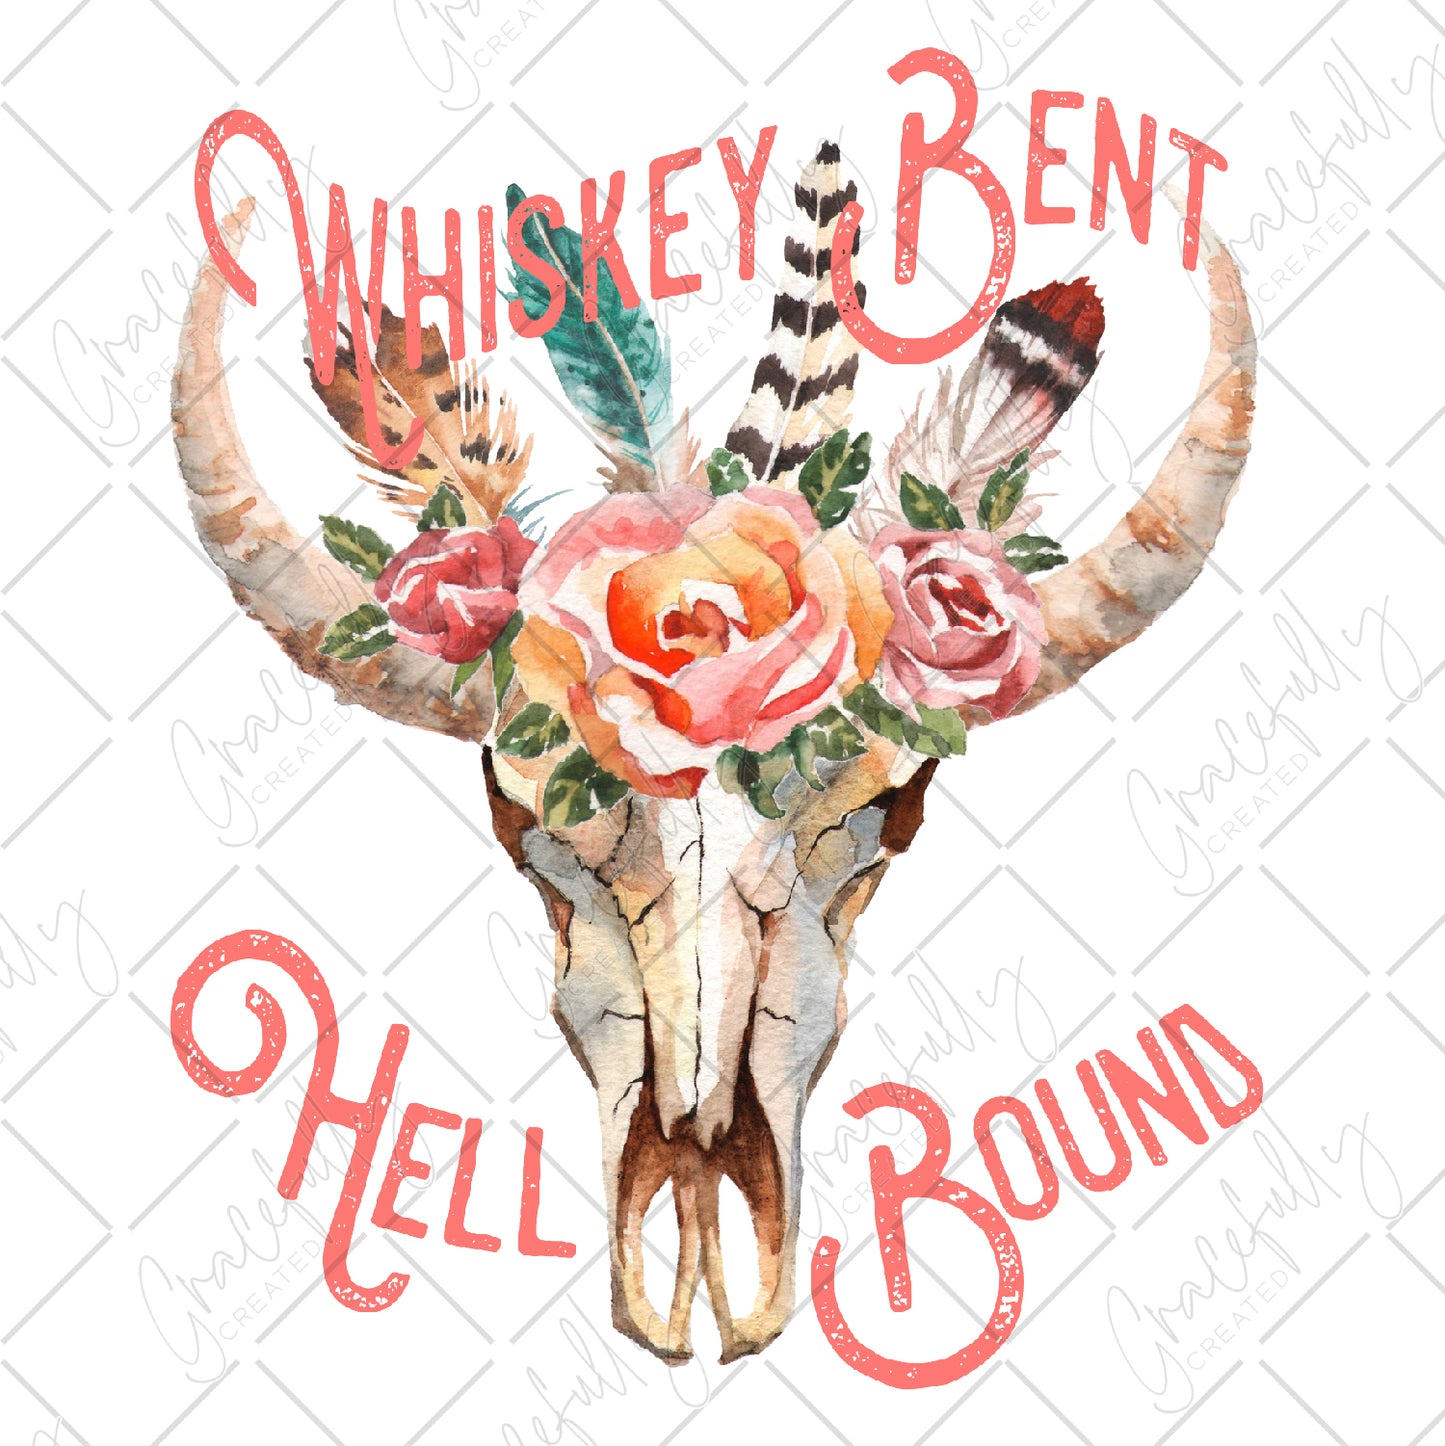 B5 Whiskey Bent Hell Bound